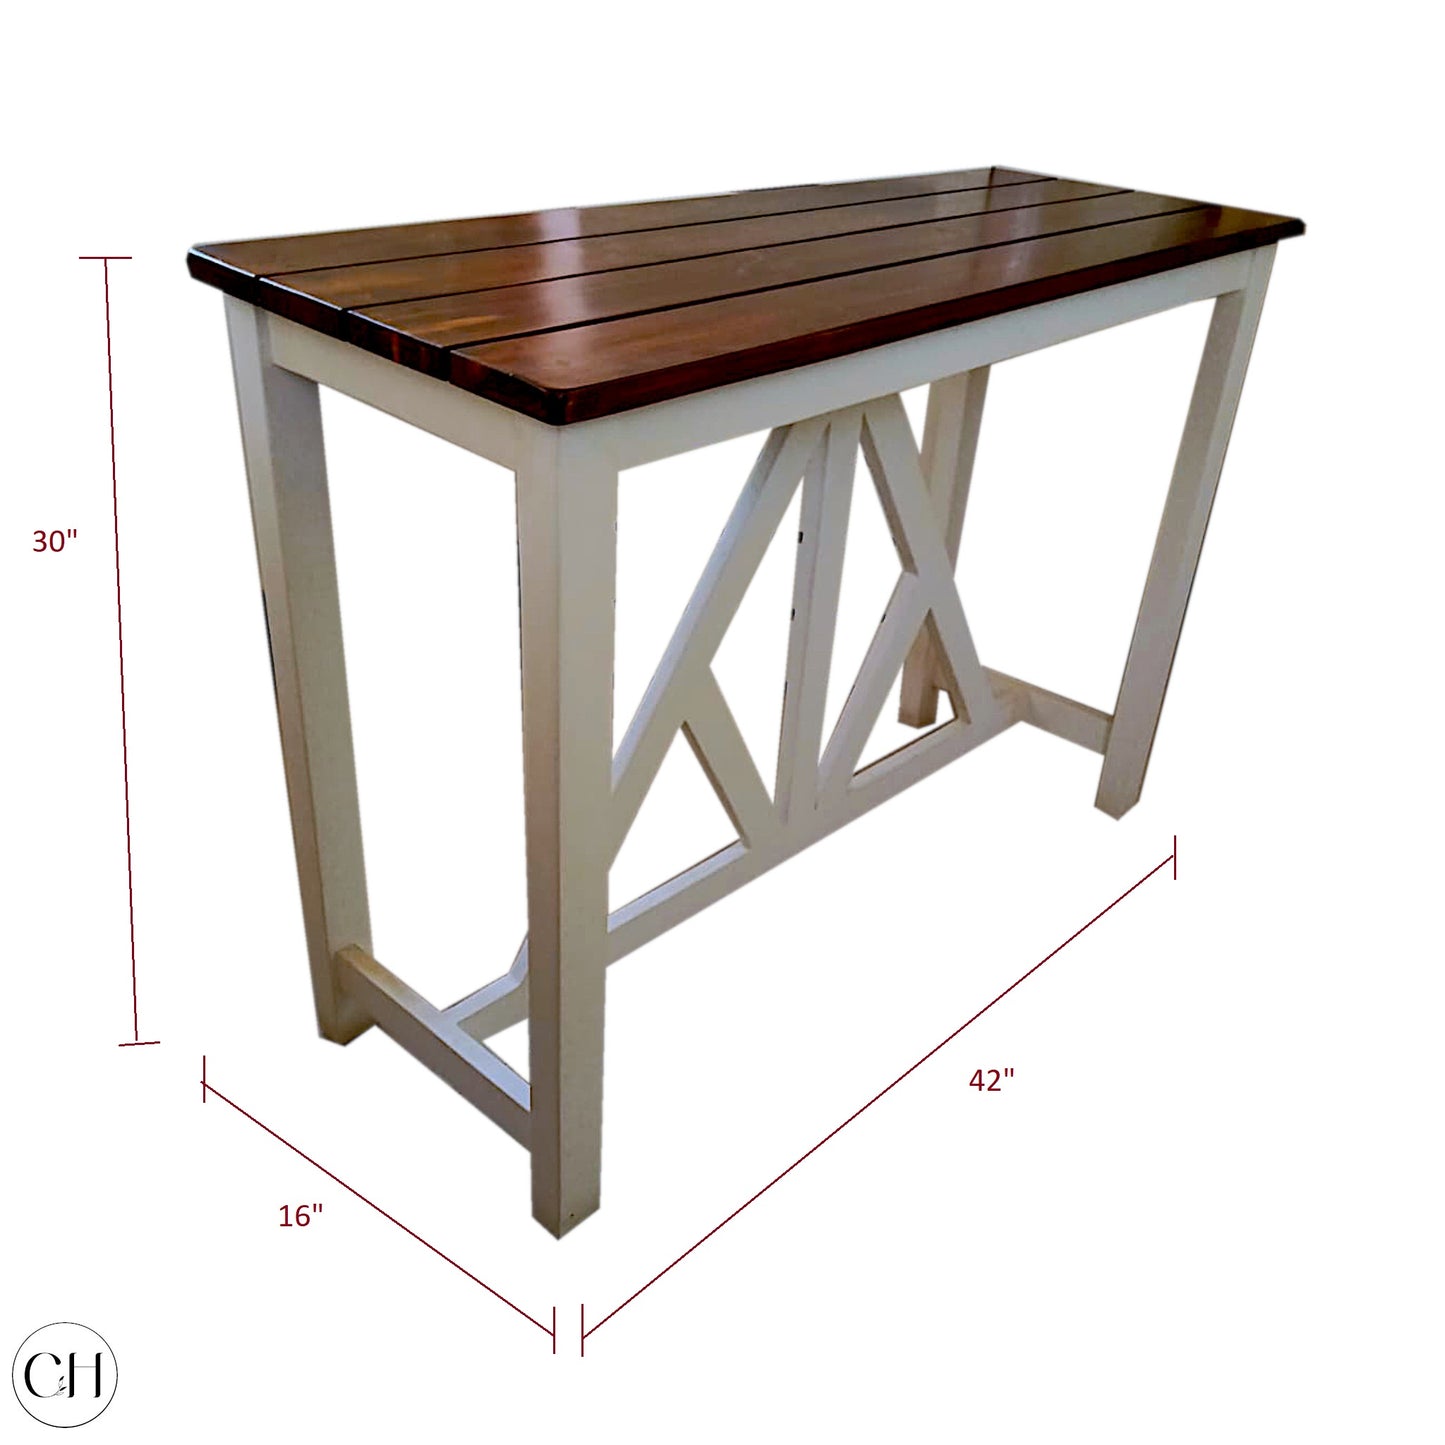 Erina - Farmhouse-style Console Table with Slatted Top - CustHum